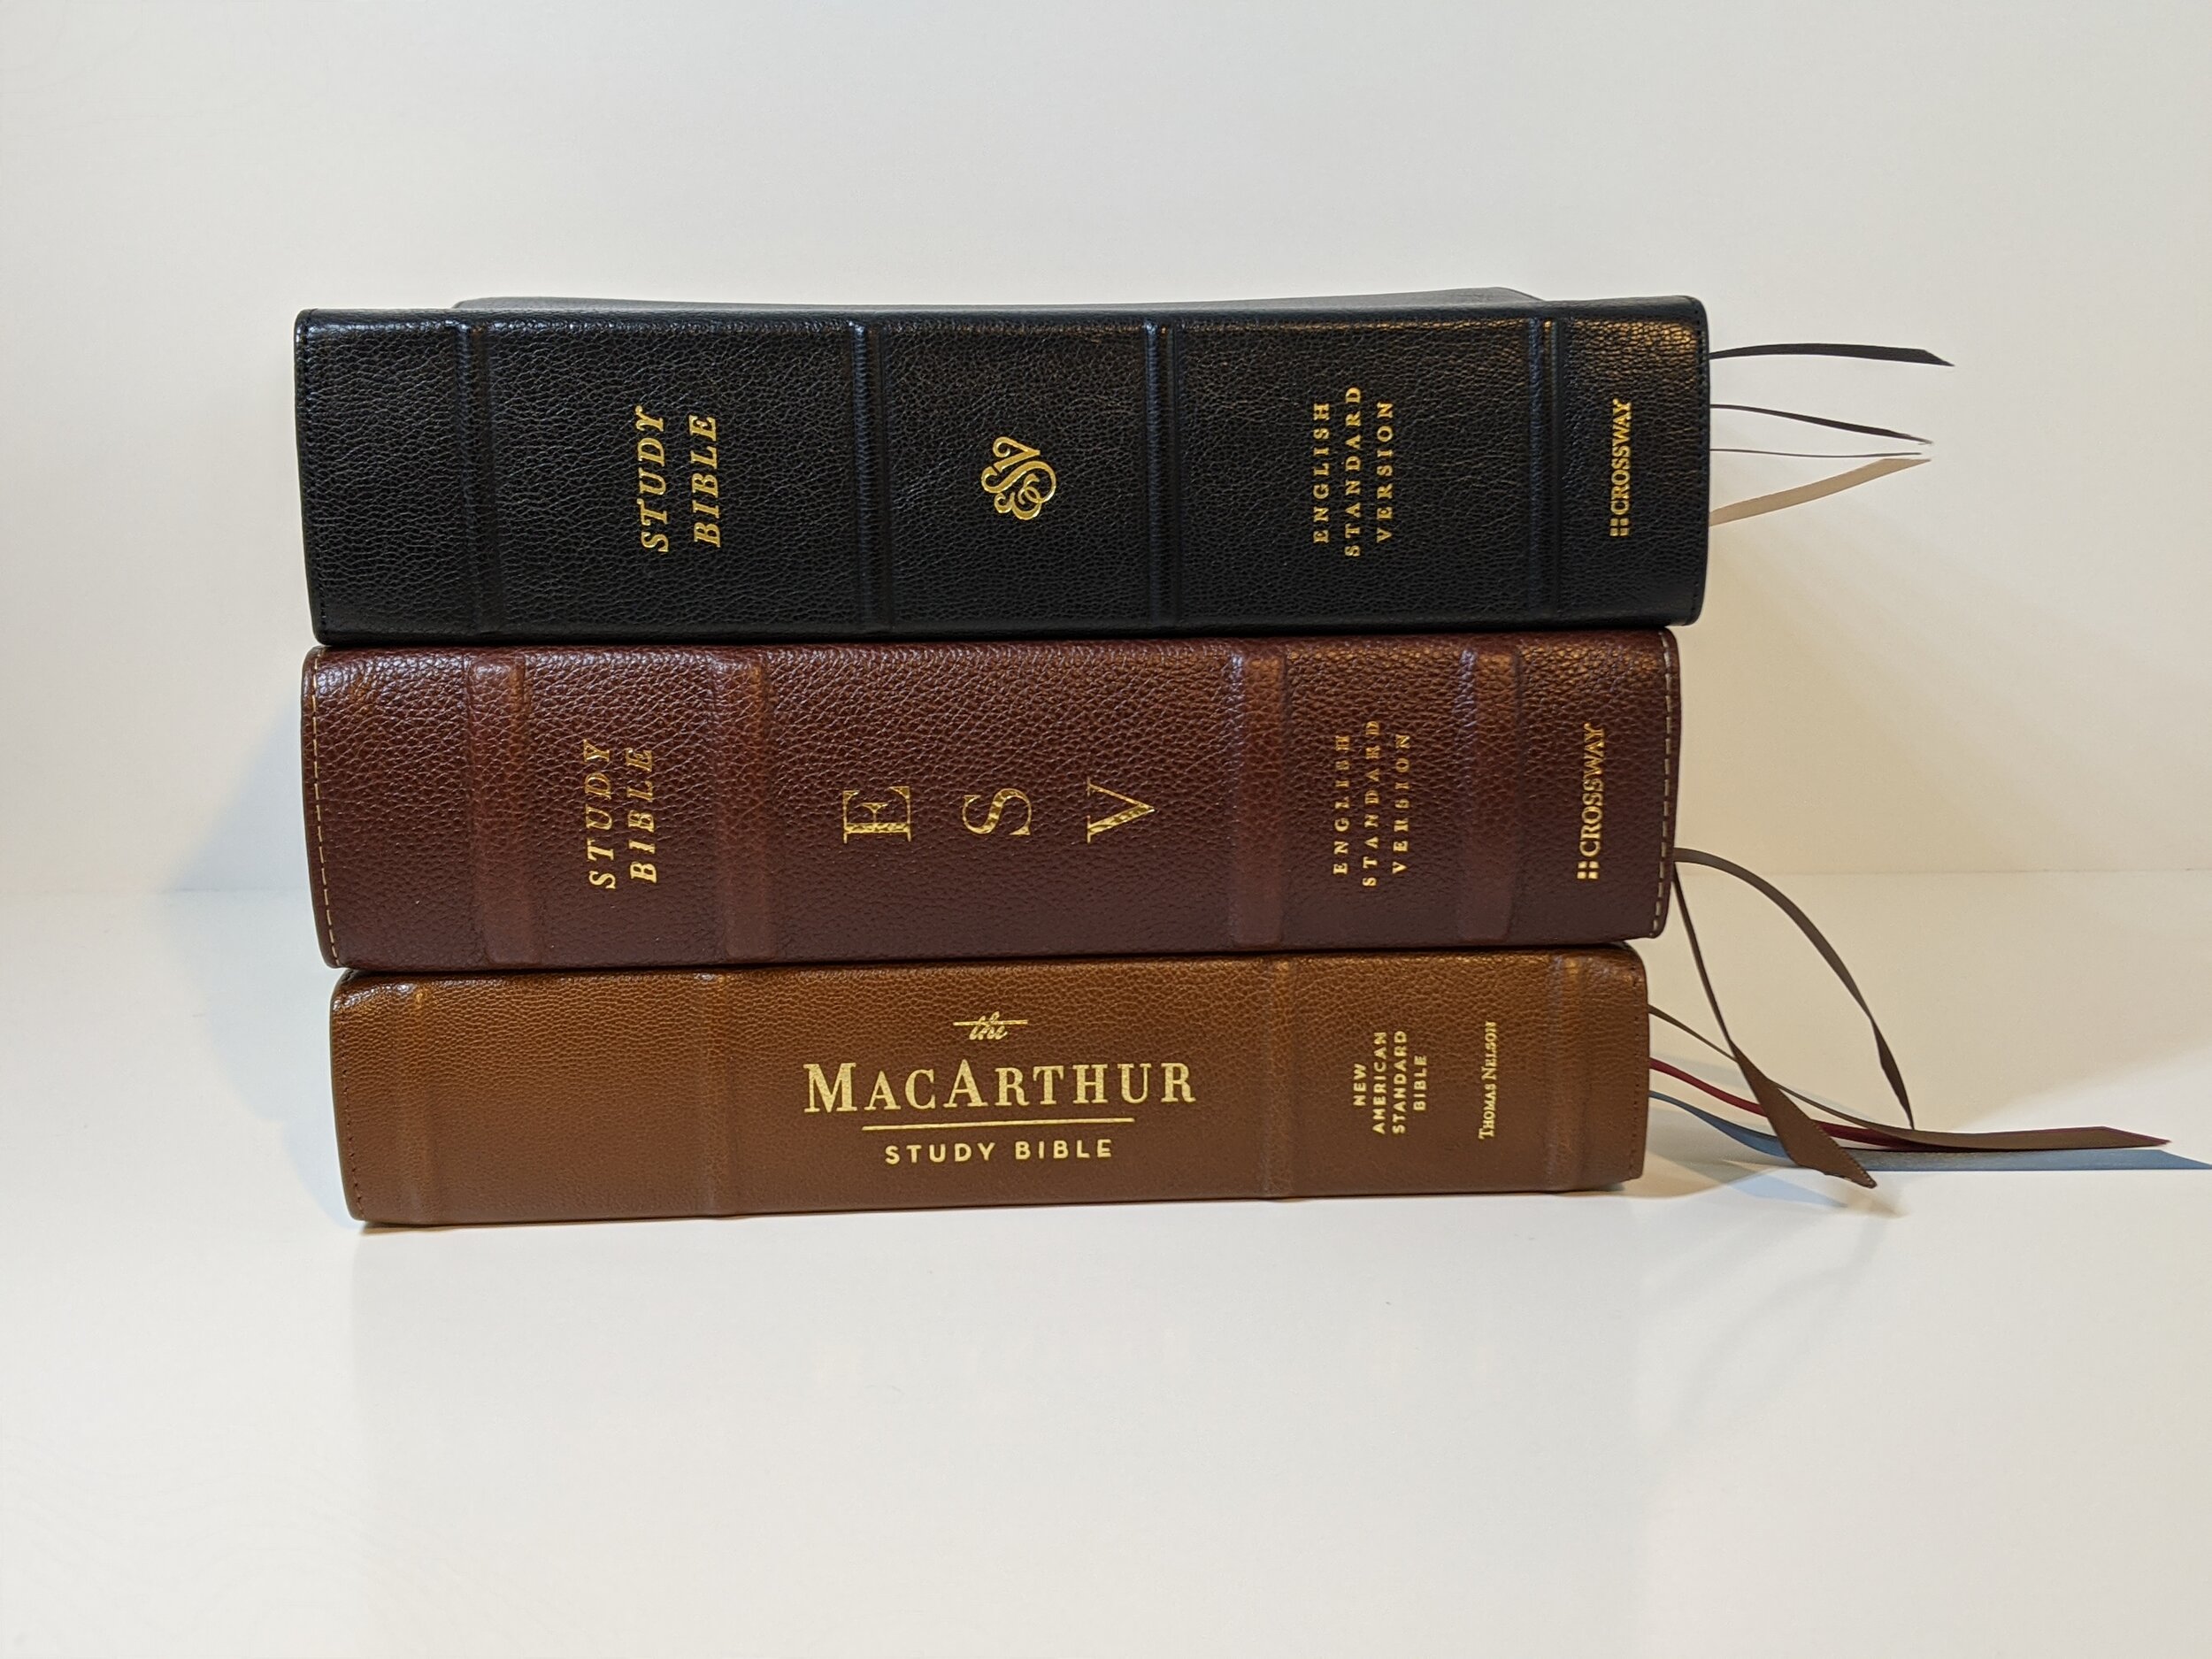  top to bottom: ESV Heirloom Study Bible, ESV Study Bible in brown cowhide, MacArthur Premier Edition 